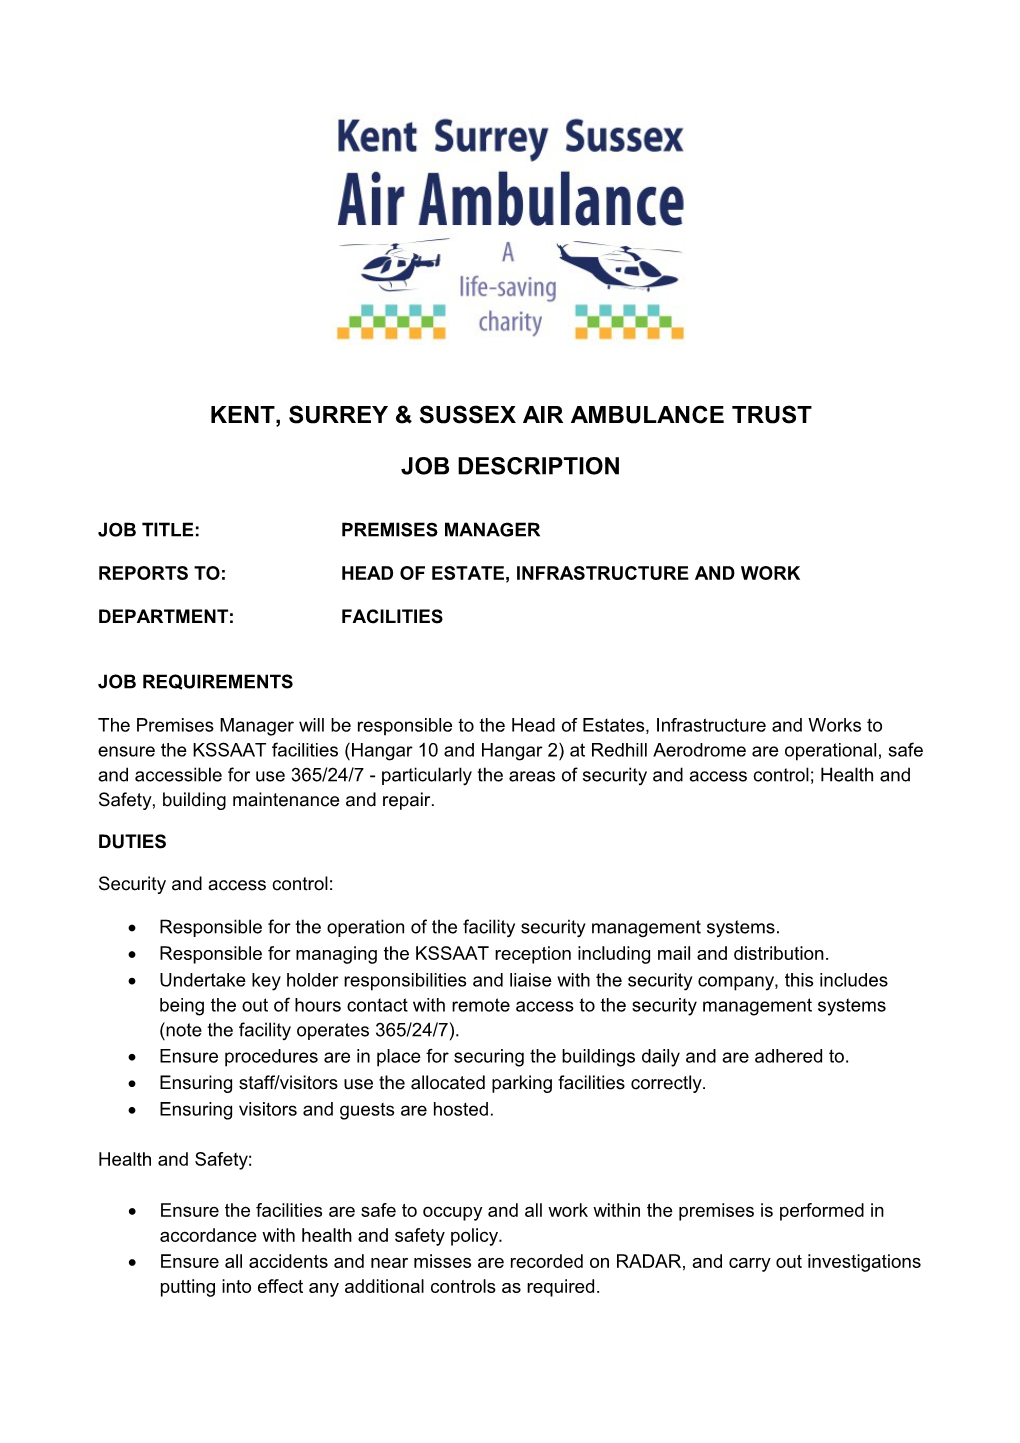 Kent Air Ambulance Trust